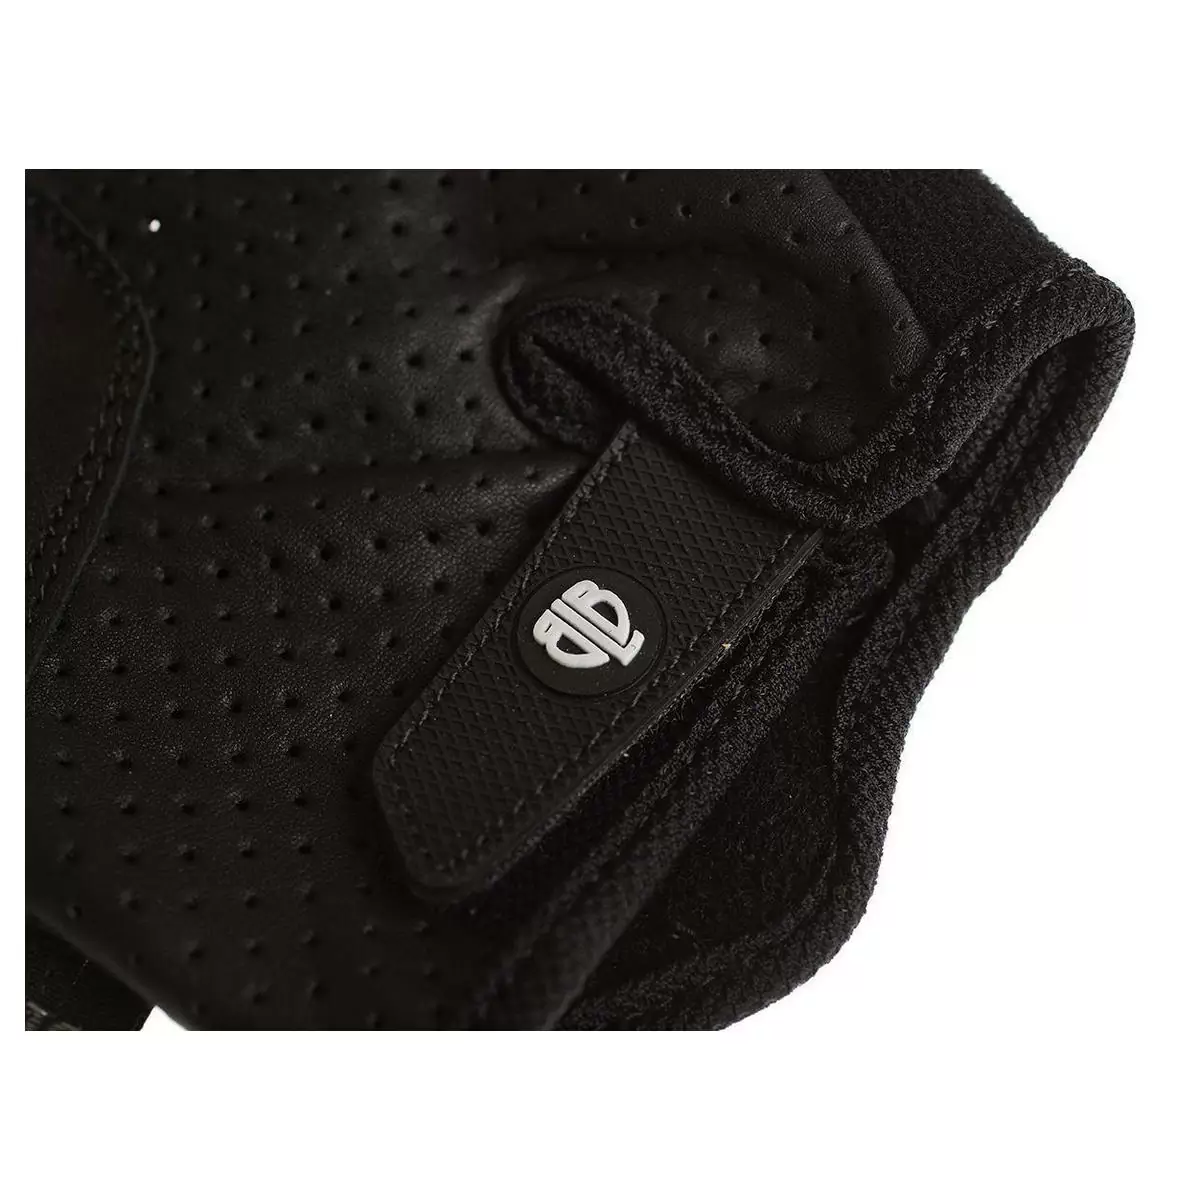 leather gloves classic sport size xxl black #5